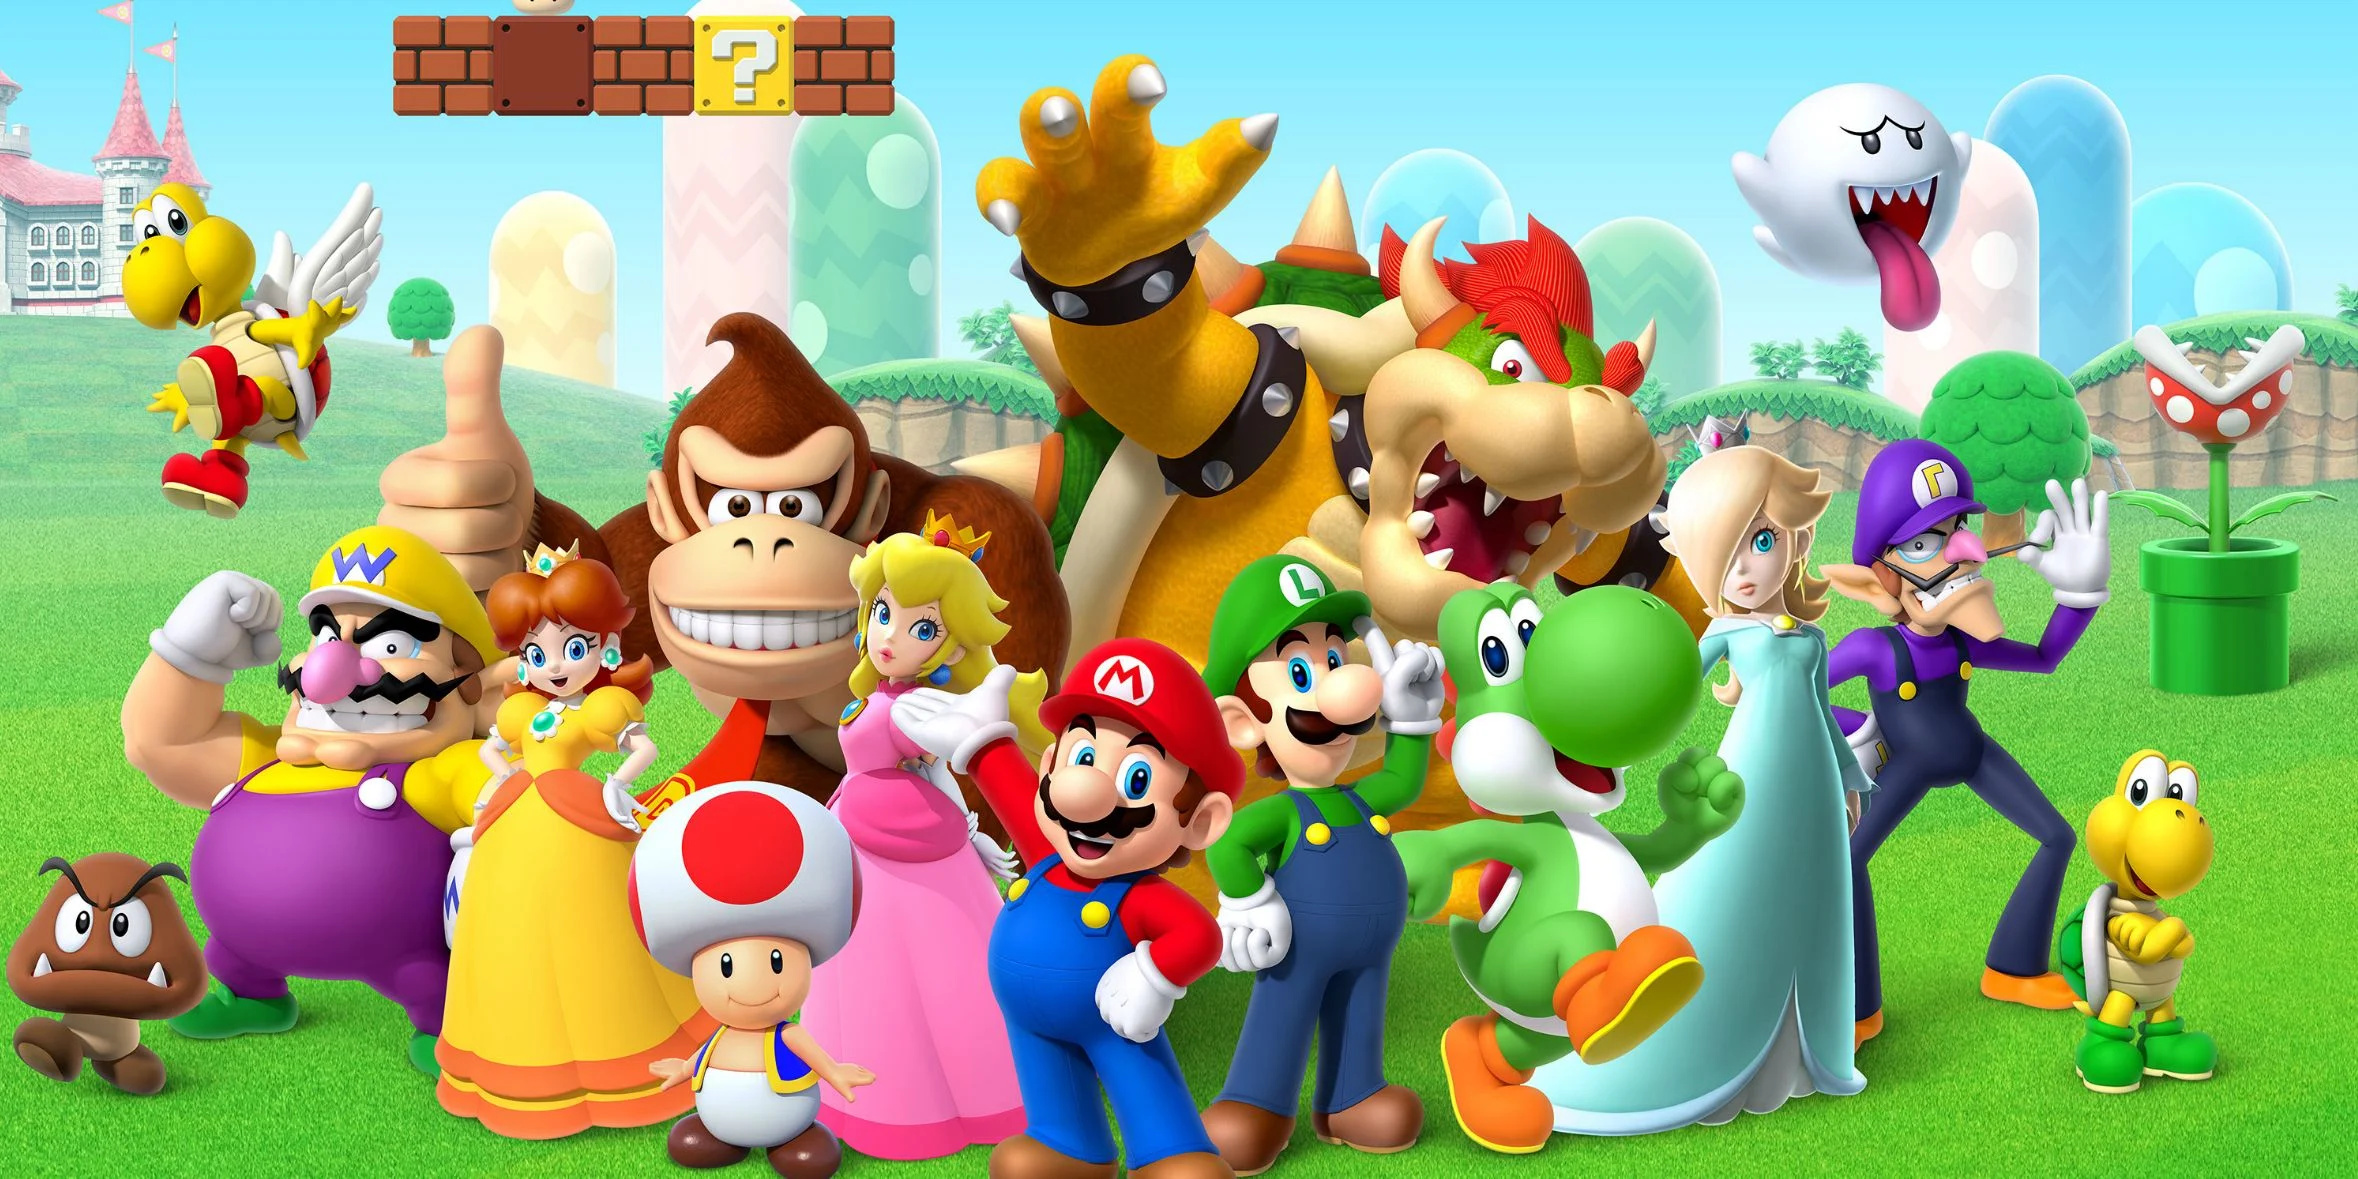 Super Mario Bros. animated film, Miyamoto announcement, Gaming news, 2360x1180 Dual Screen Desktop